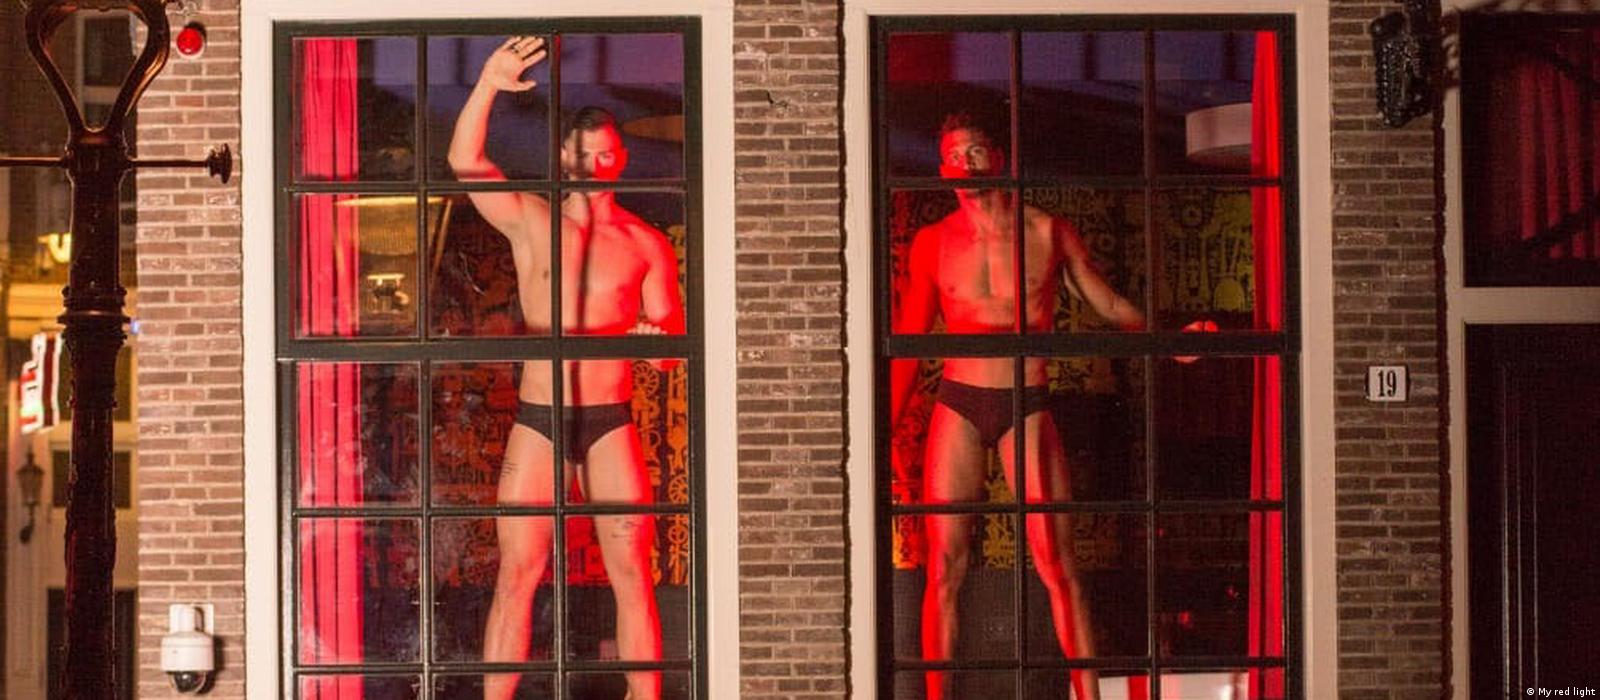 Men occupy Amsterdam brothel windows â€“ DW â€“ 08/03/2019